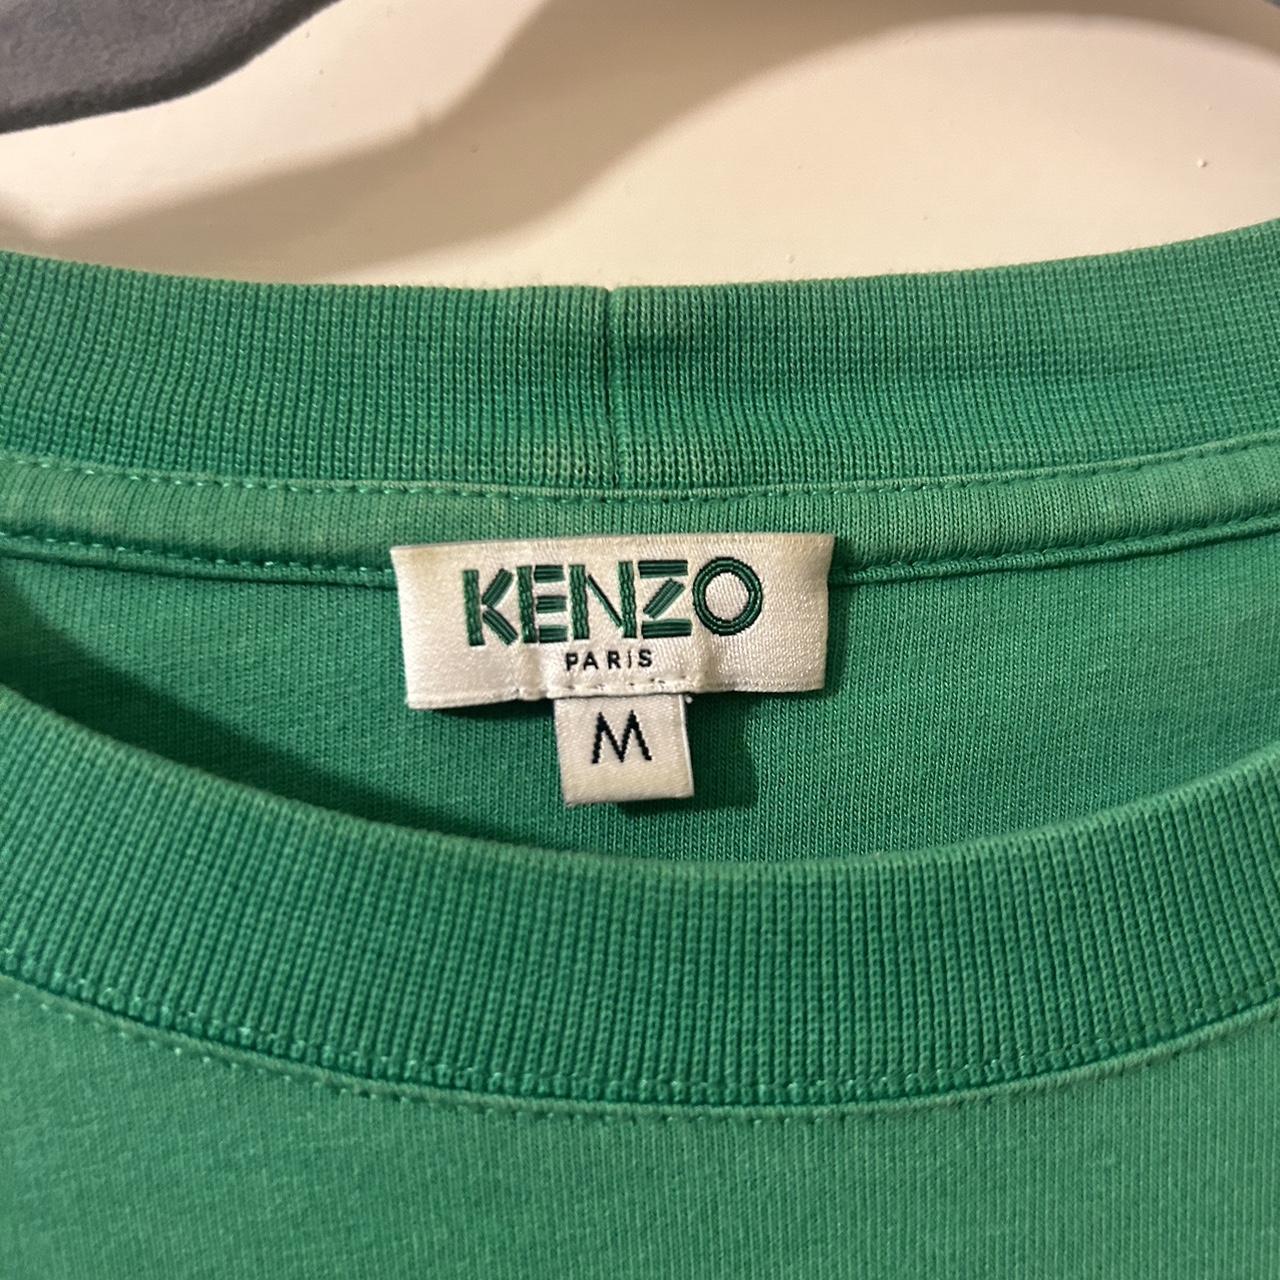 KENZO green tee💚🦁 - Depop